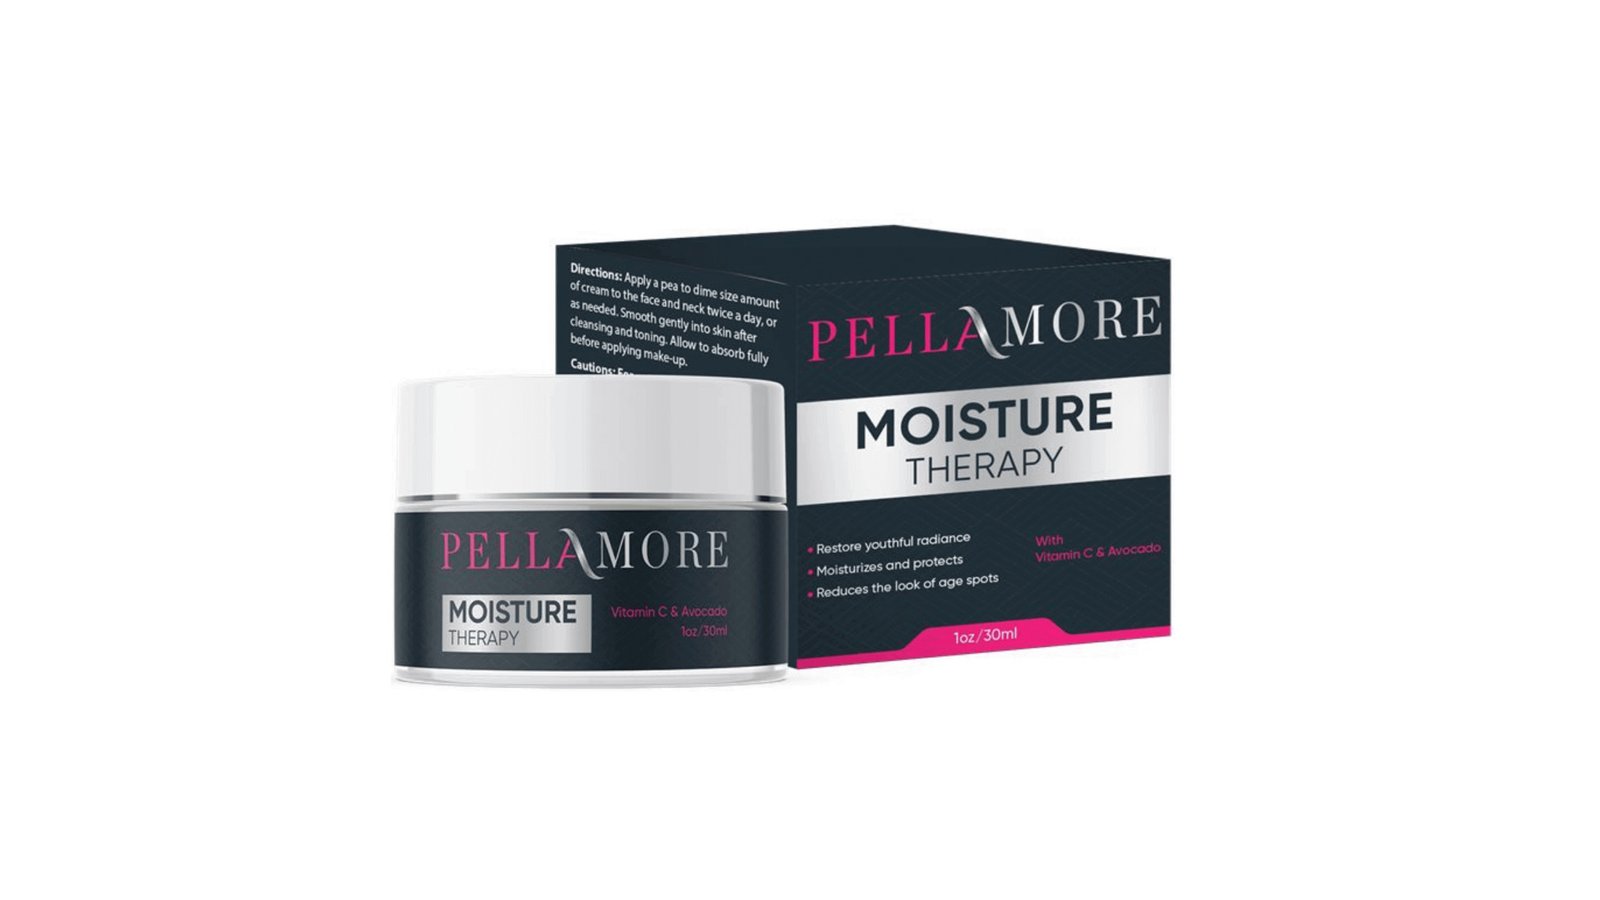 Pellamore Moisture Therapy Reviews